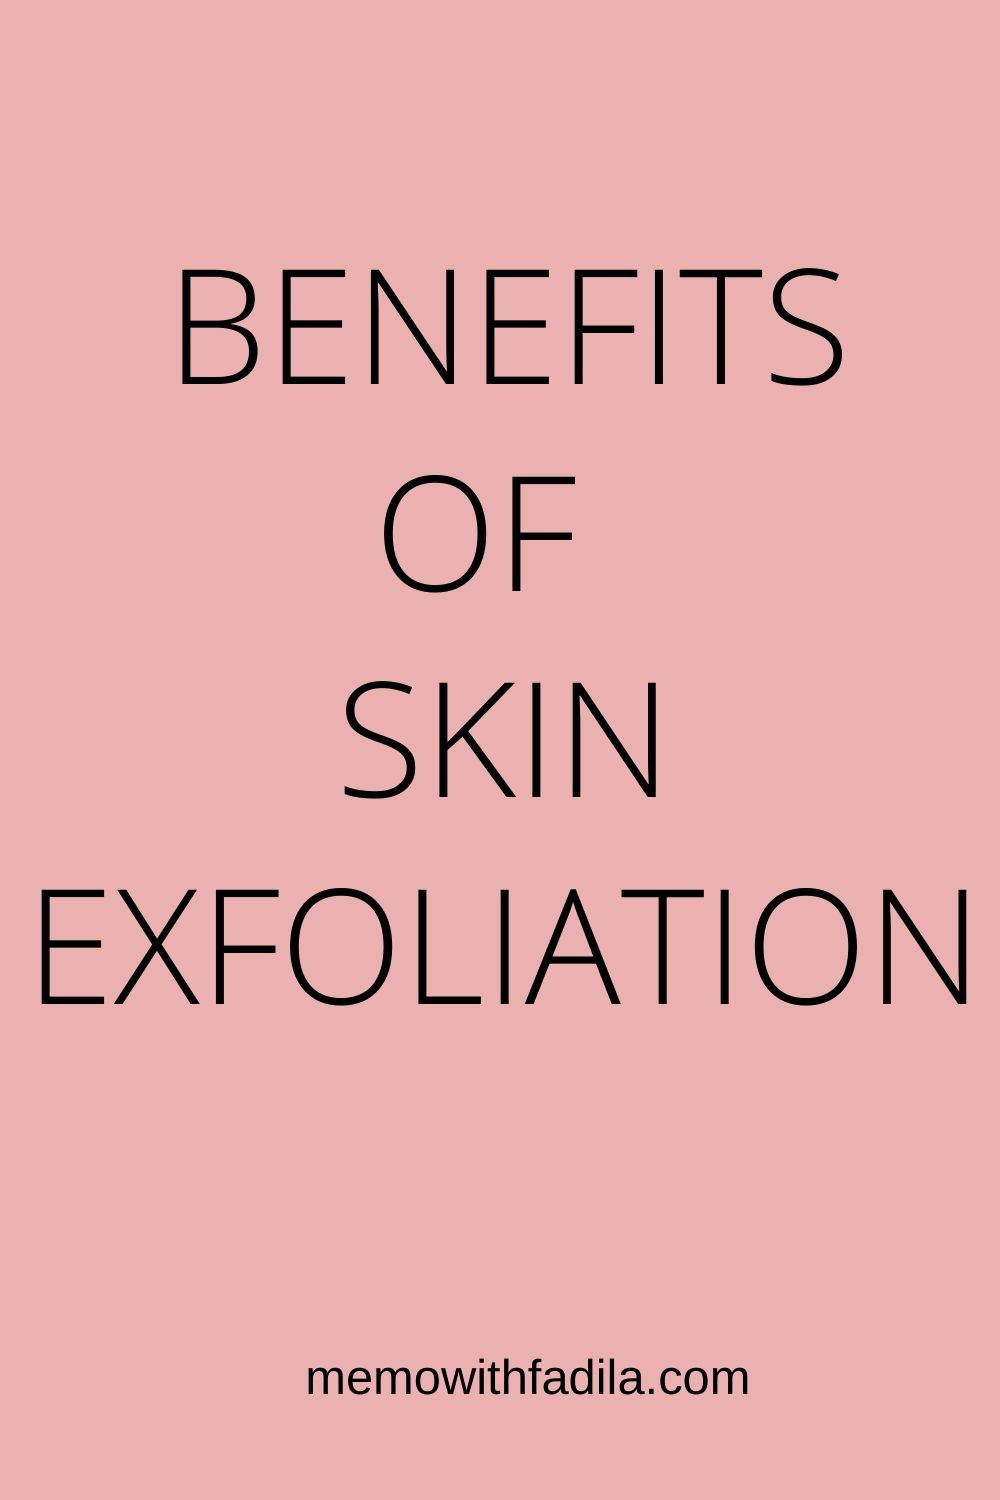 Benefits of skin exfoliation